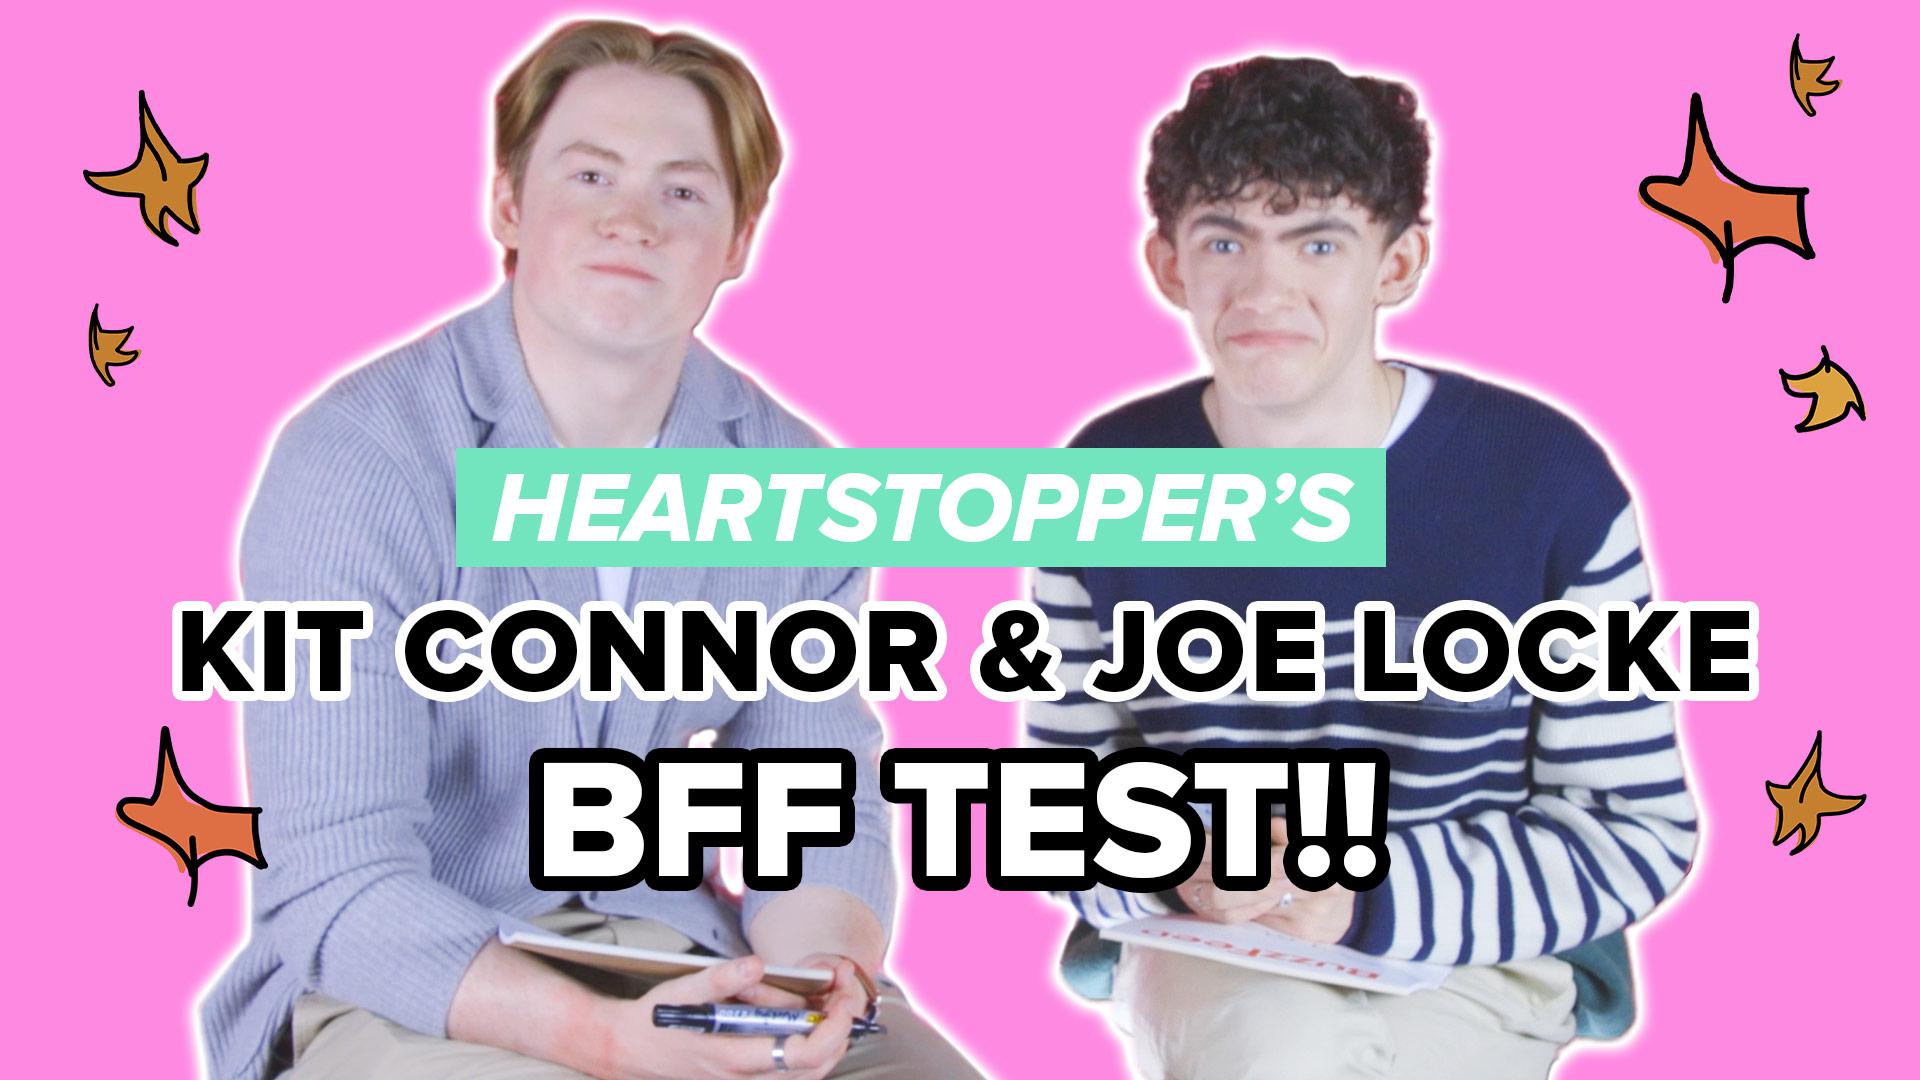 Heartstopper Stars Joe Locke and Kit Connor are IRL BFFs  Them